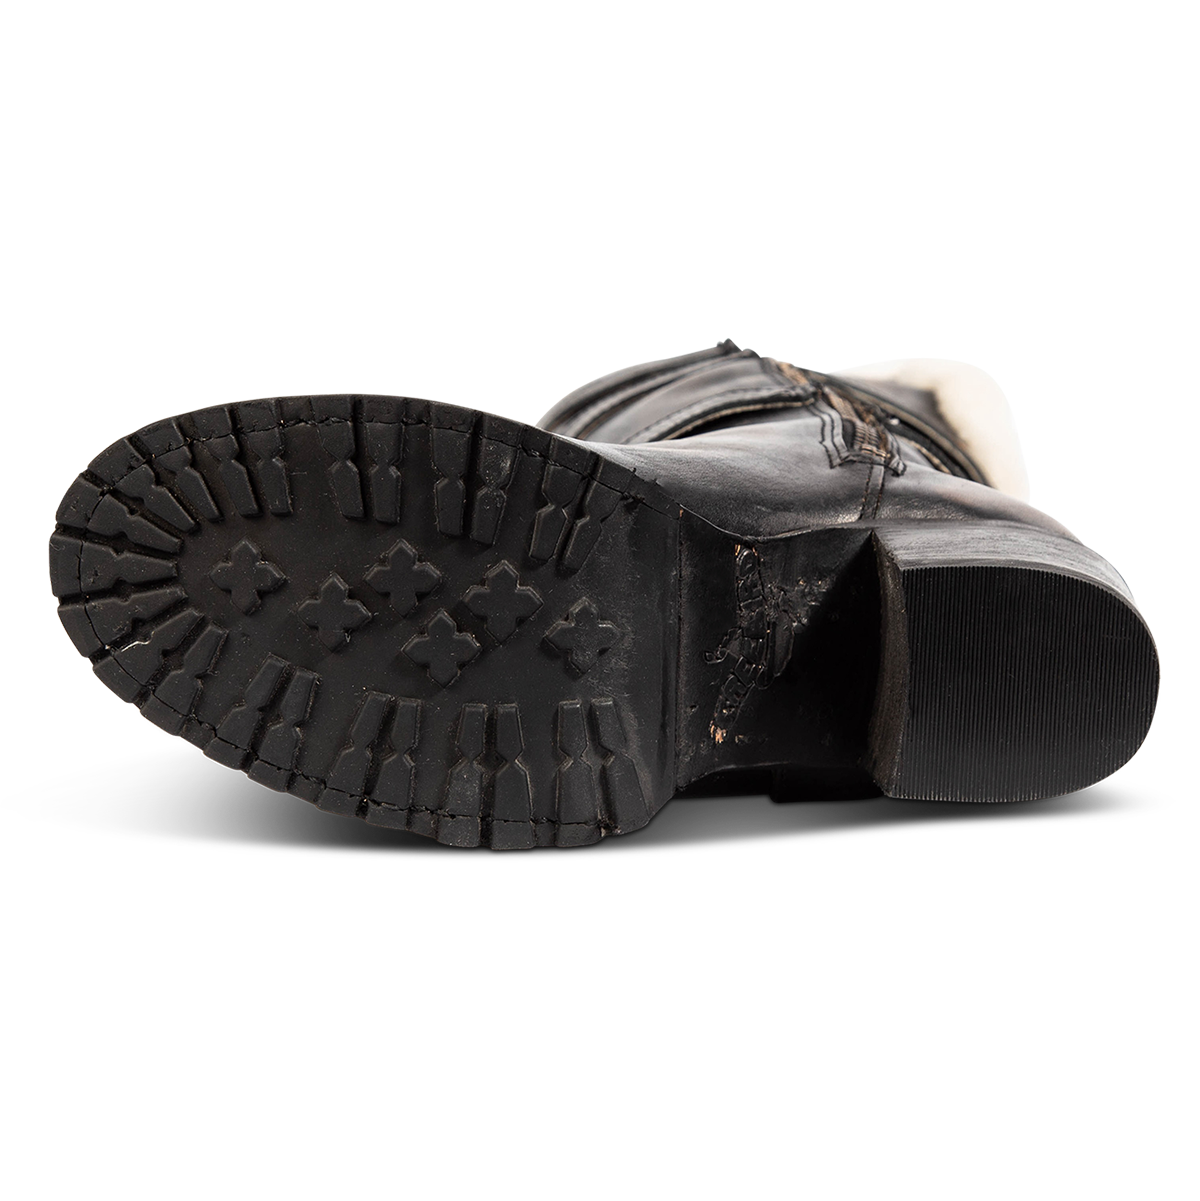 Rubber tread sole on FREEBIRD women's North black leather boot